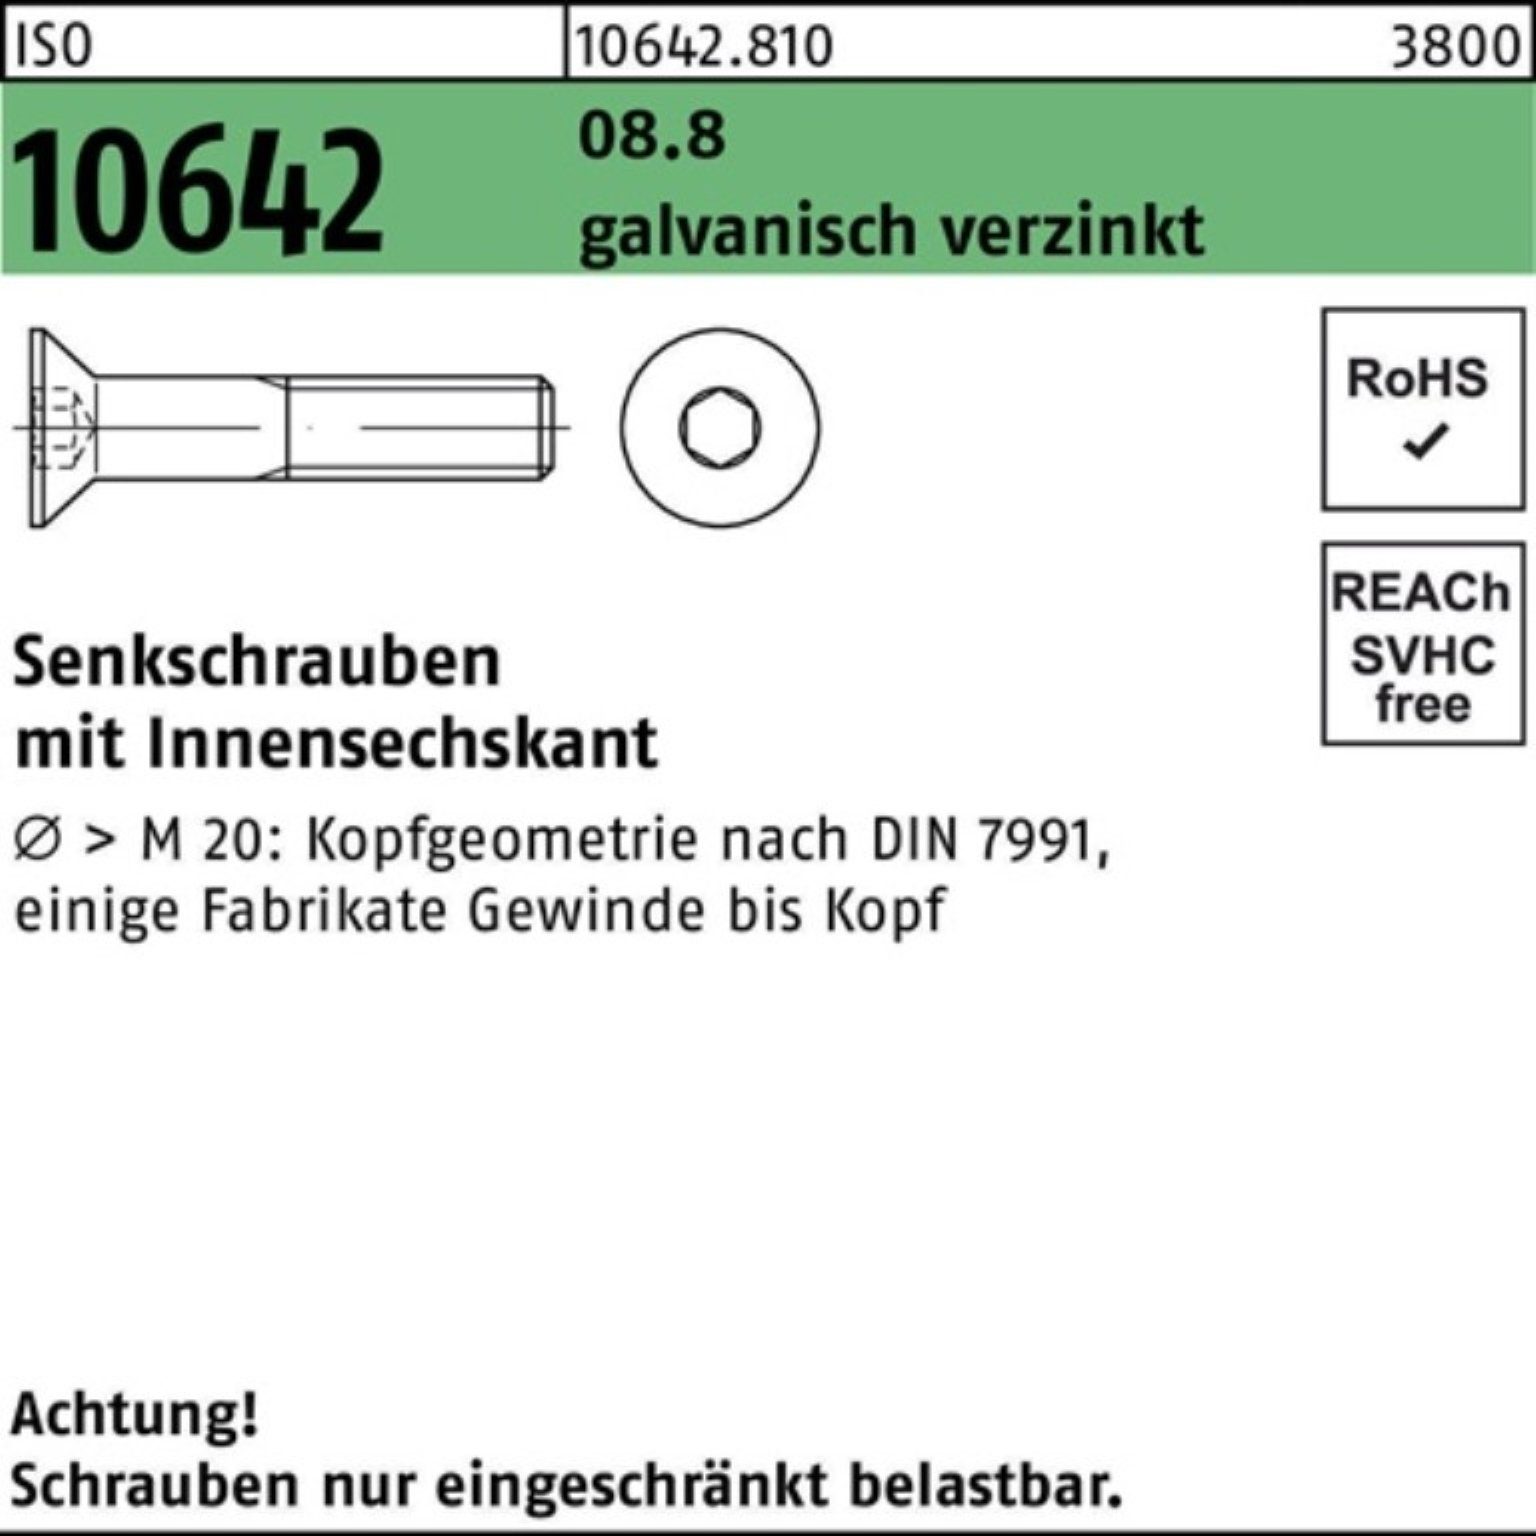 Reyher M16x 55 Senkschraube galv.verz. Pack 10642 8.8 Innen-6kt 100er Senkschraube ISO 50